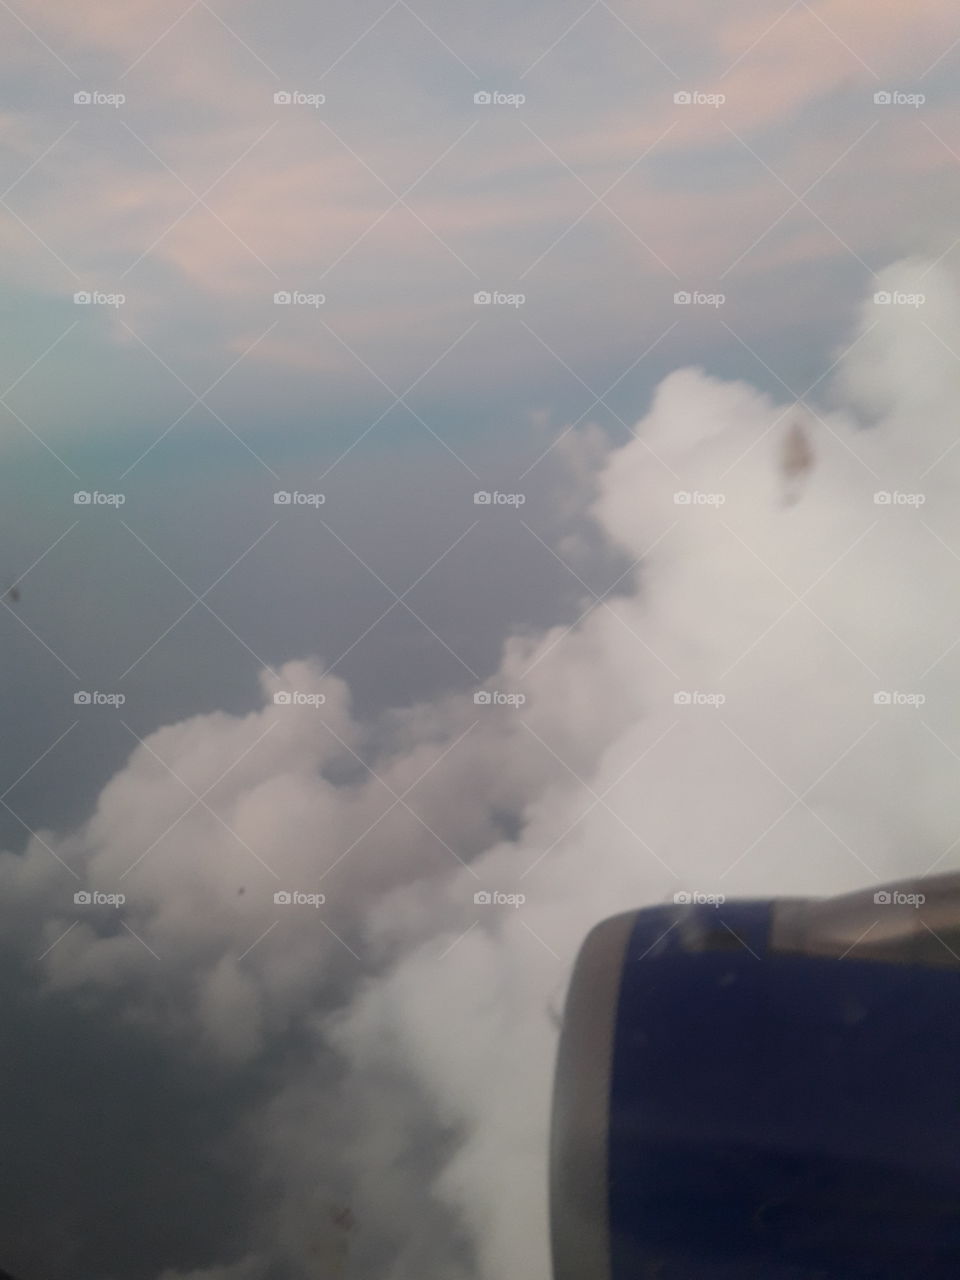 Cloud view windows of the flight